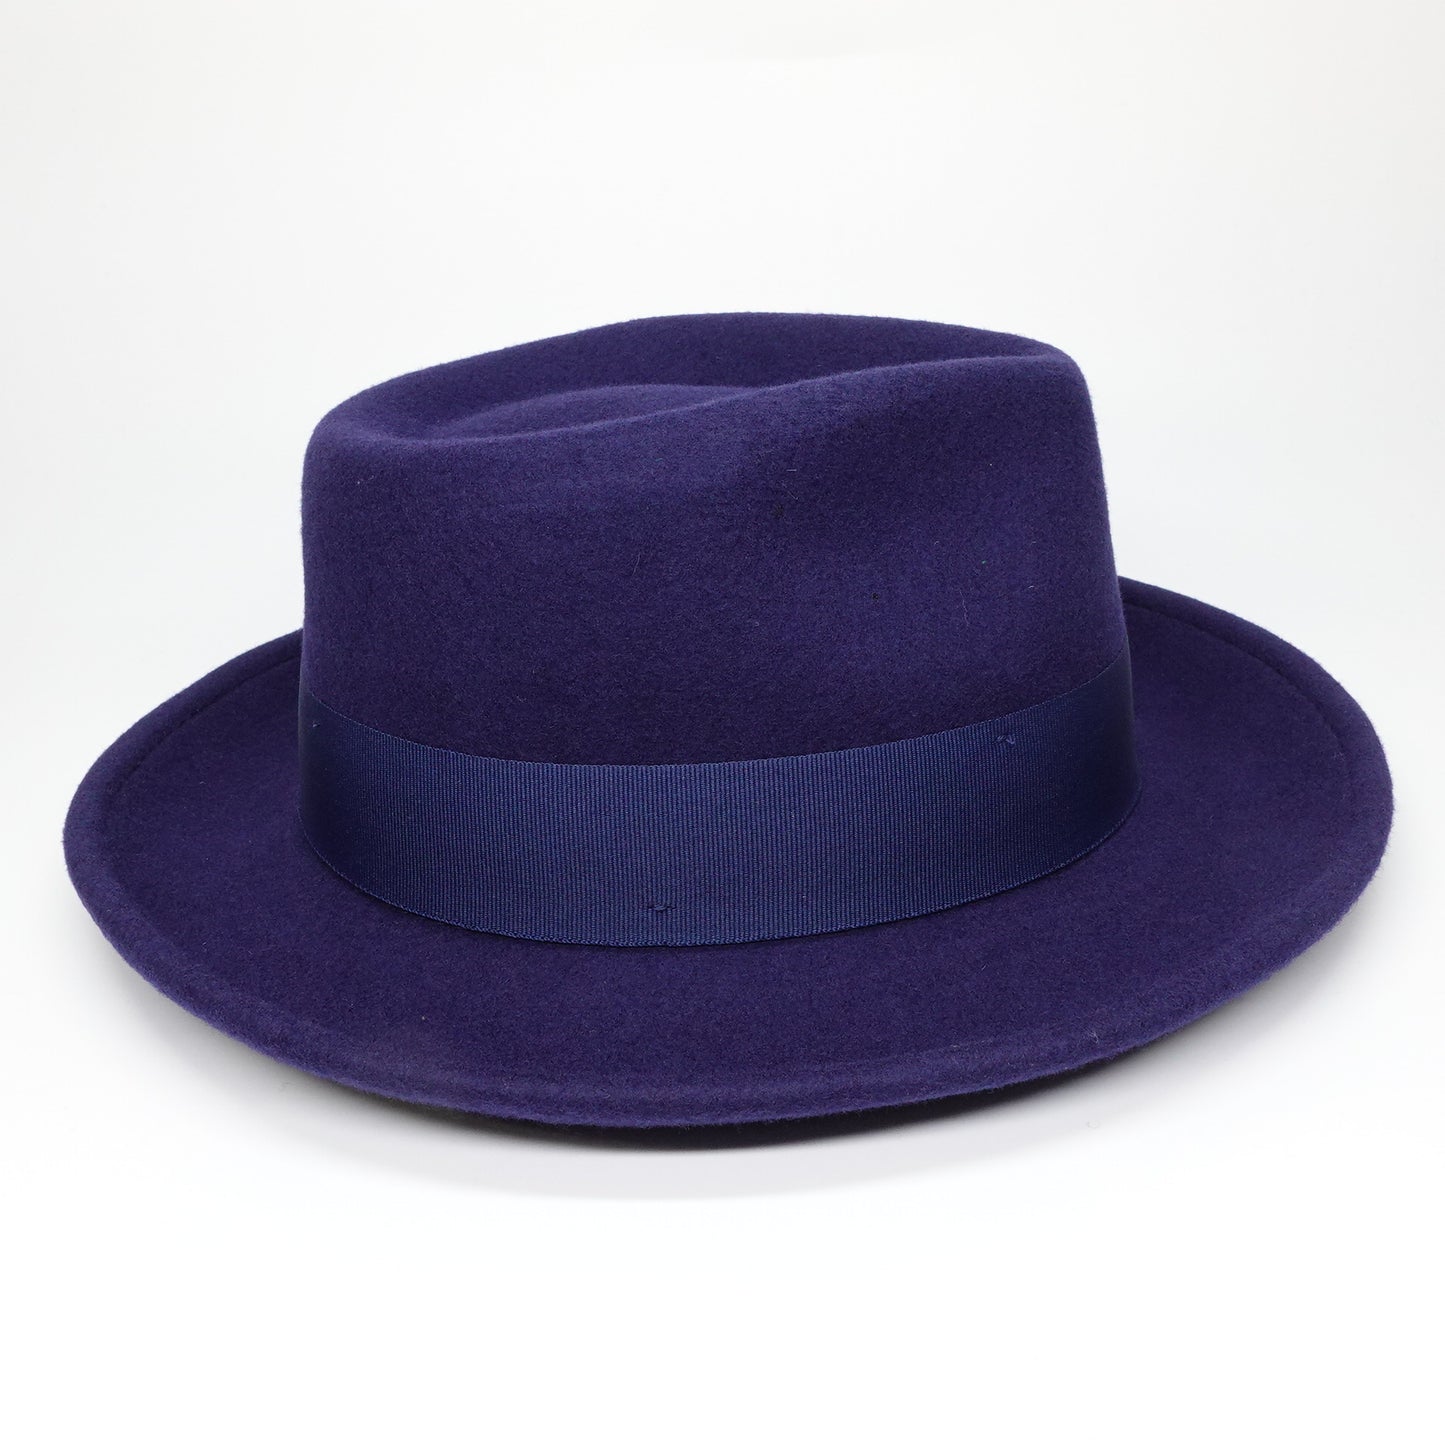 Classic, Elegant Fedora Wool Felt Hat Purely Australian Wool 3161